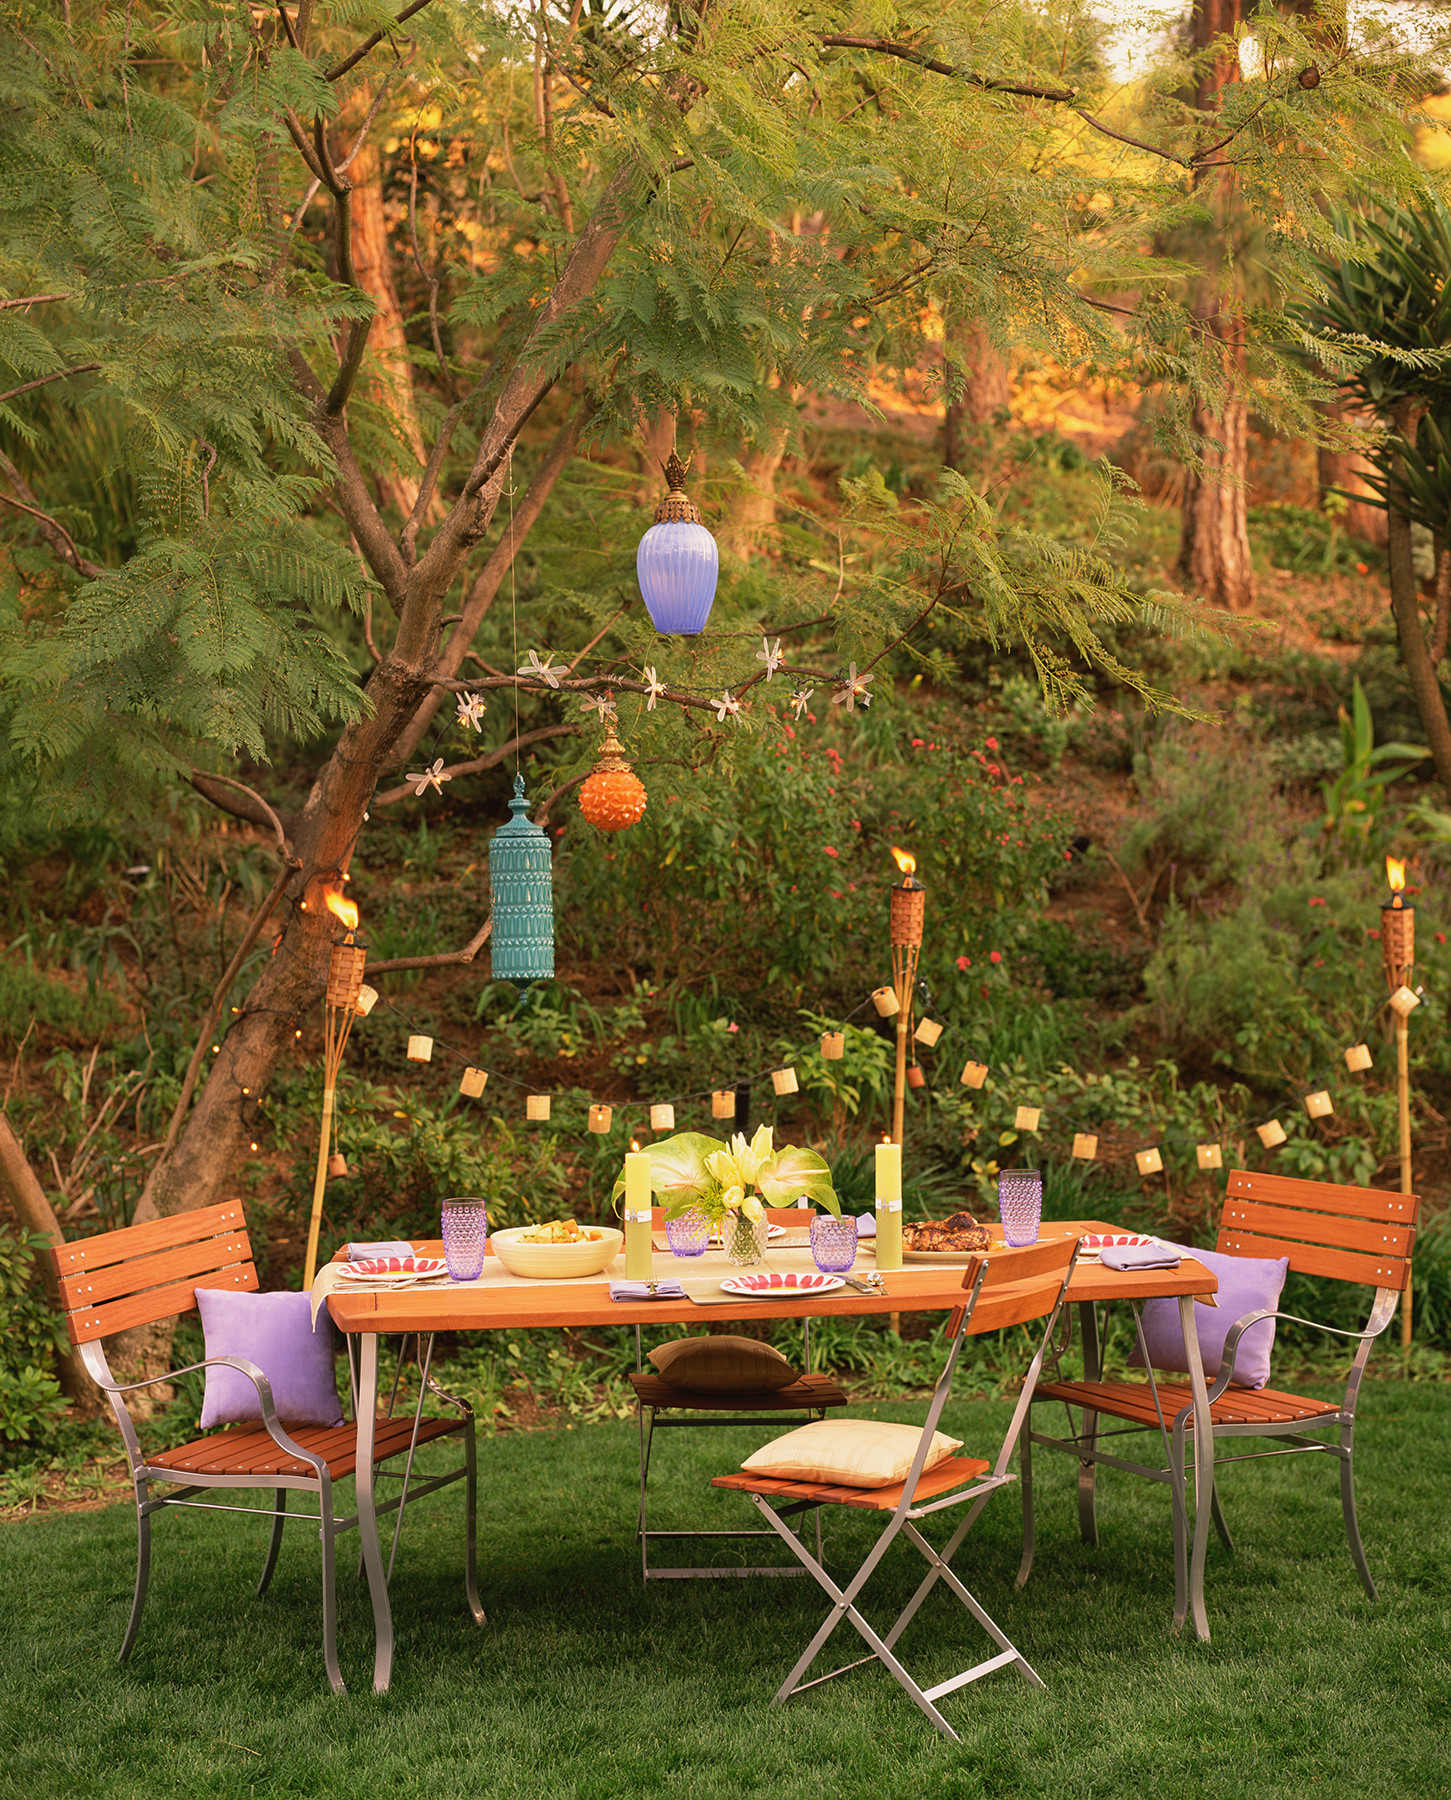 Easy Backyard Party Ideas
 17 Outdoor Party Ideas for an Effortless Backyard